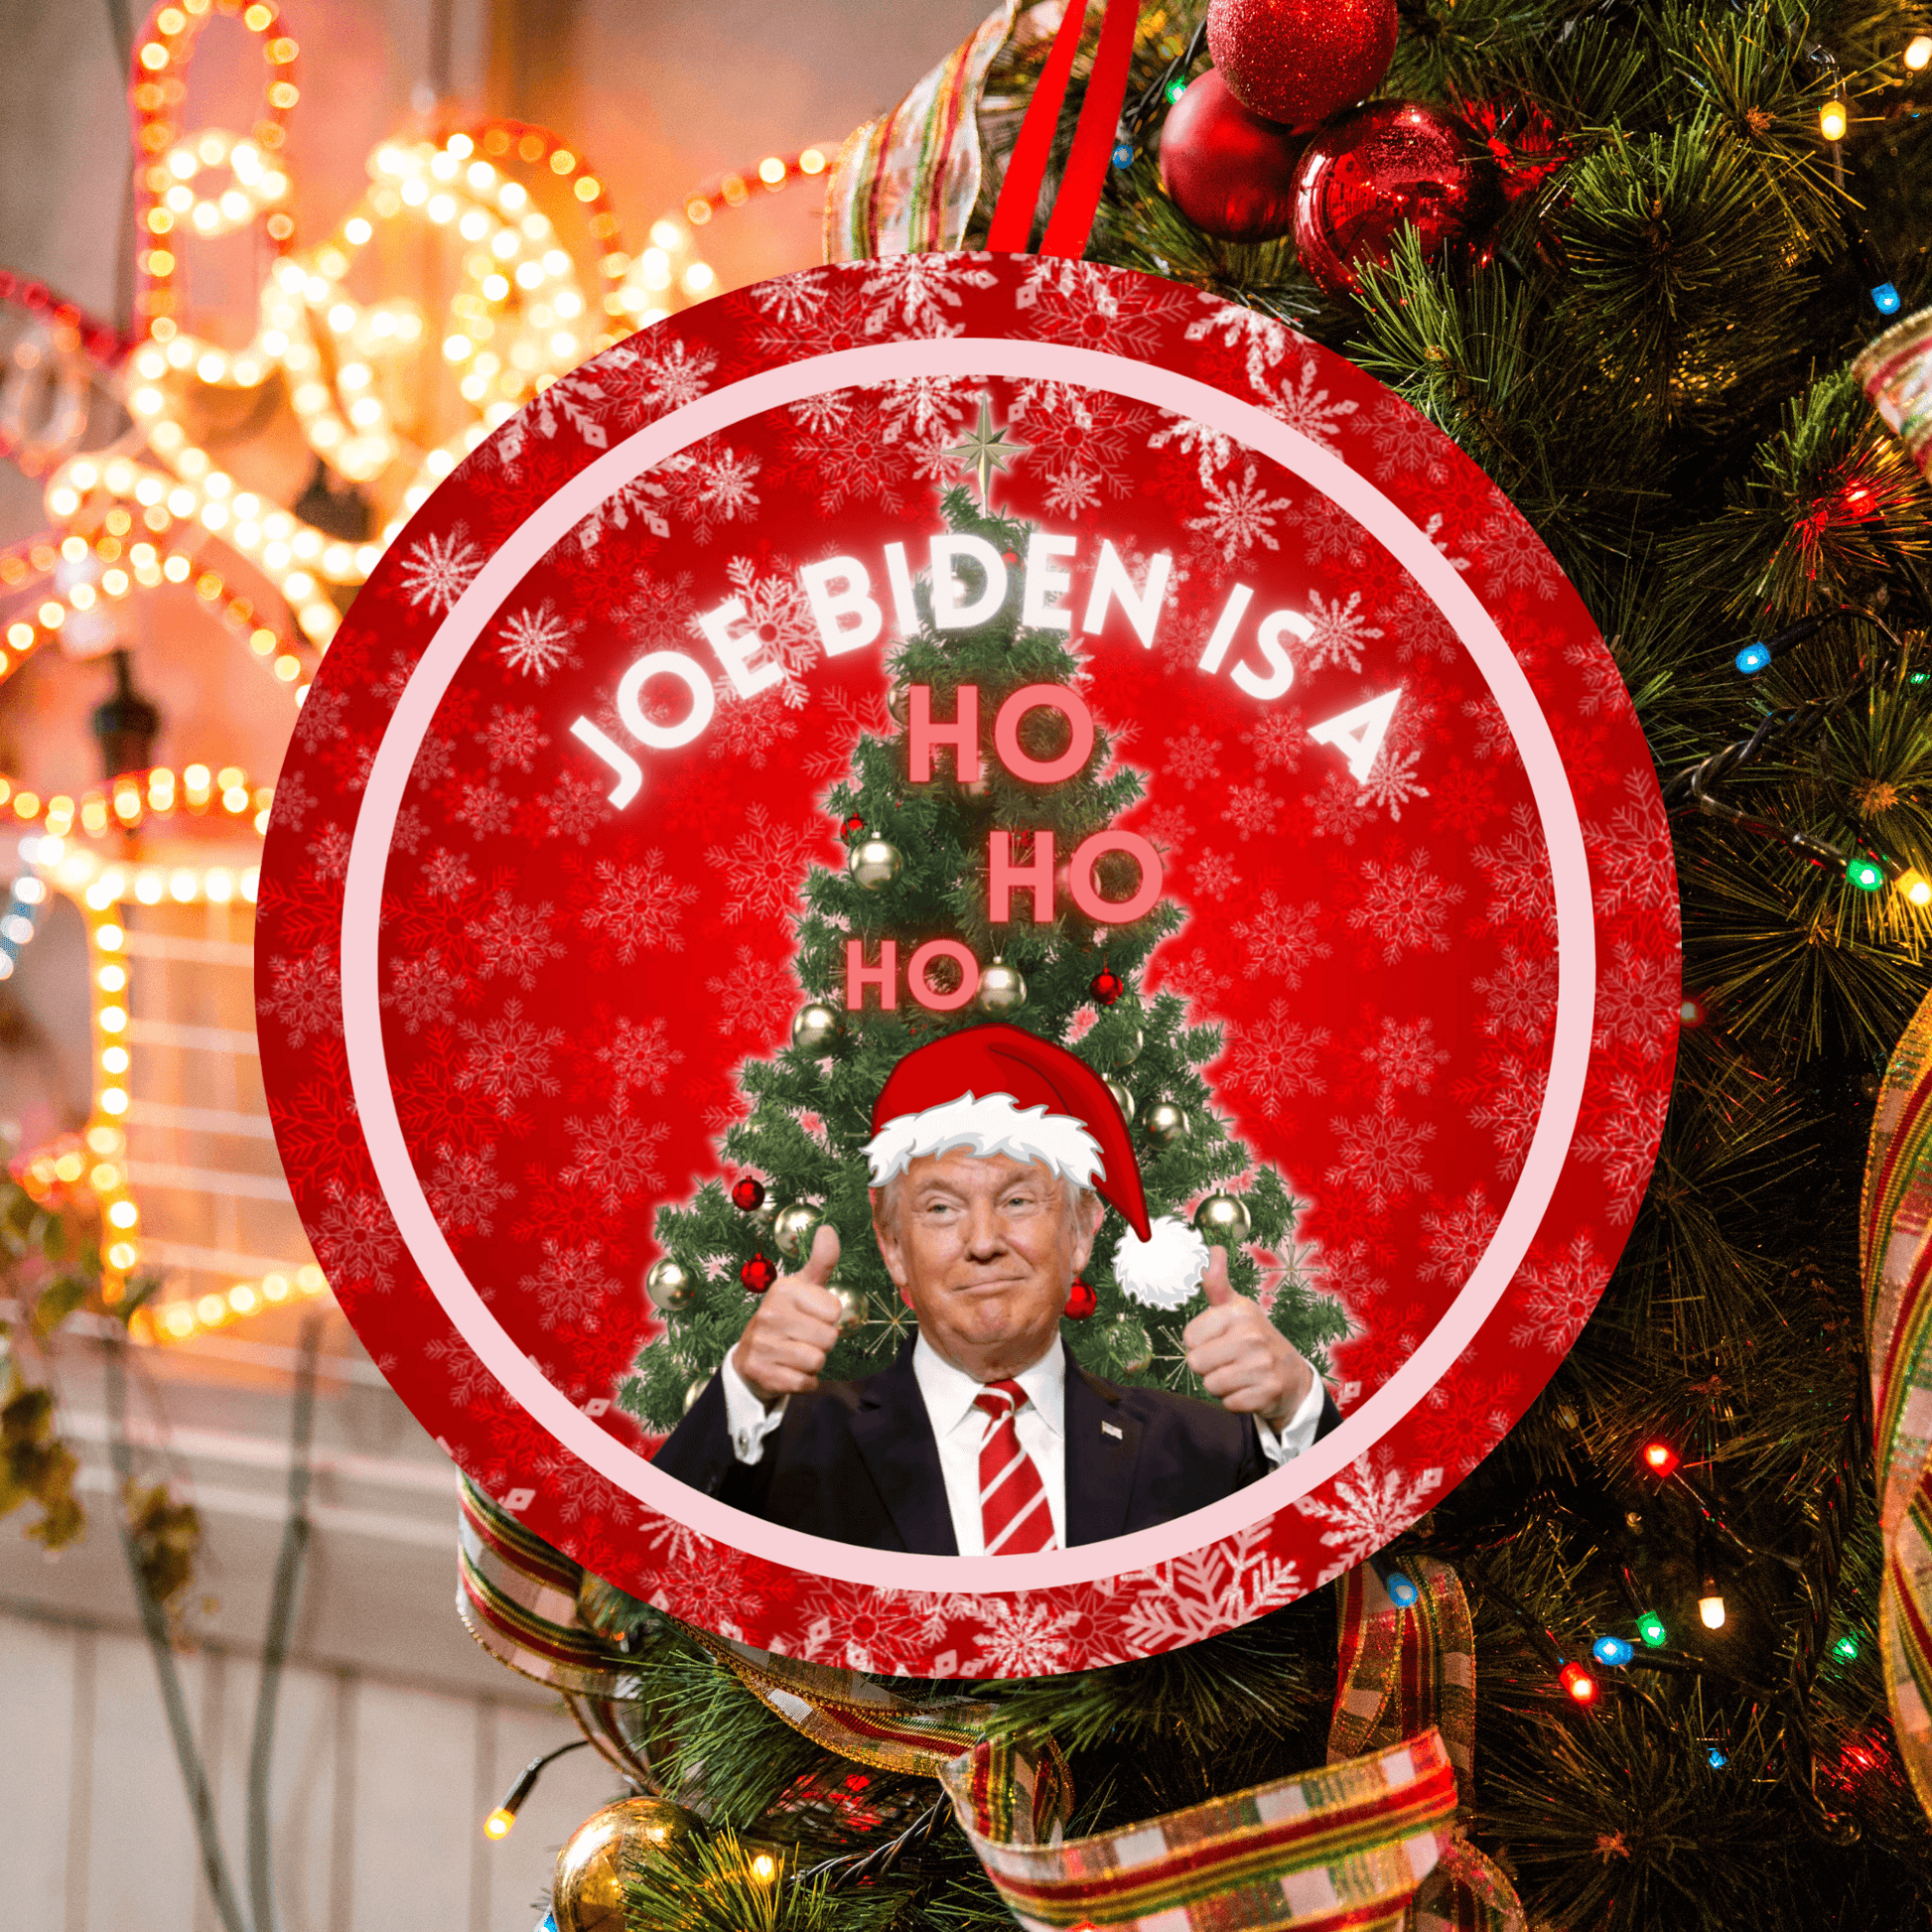 Funny Joe Biden Is A Ho Christmas Holiday Ornament, Stocking Stuffer 2